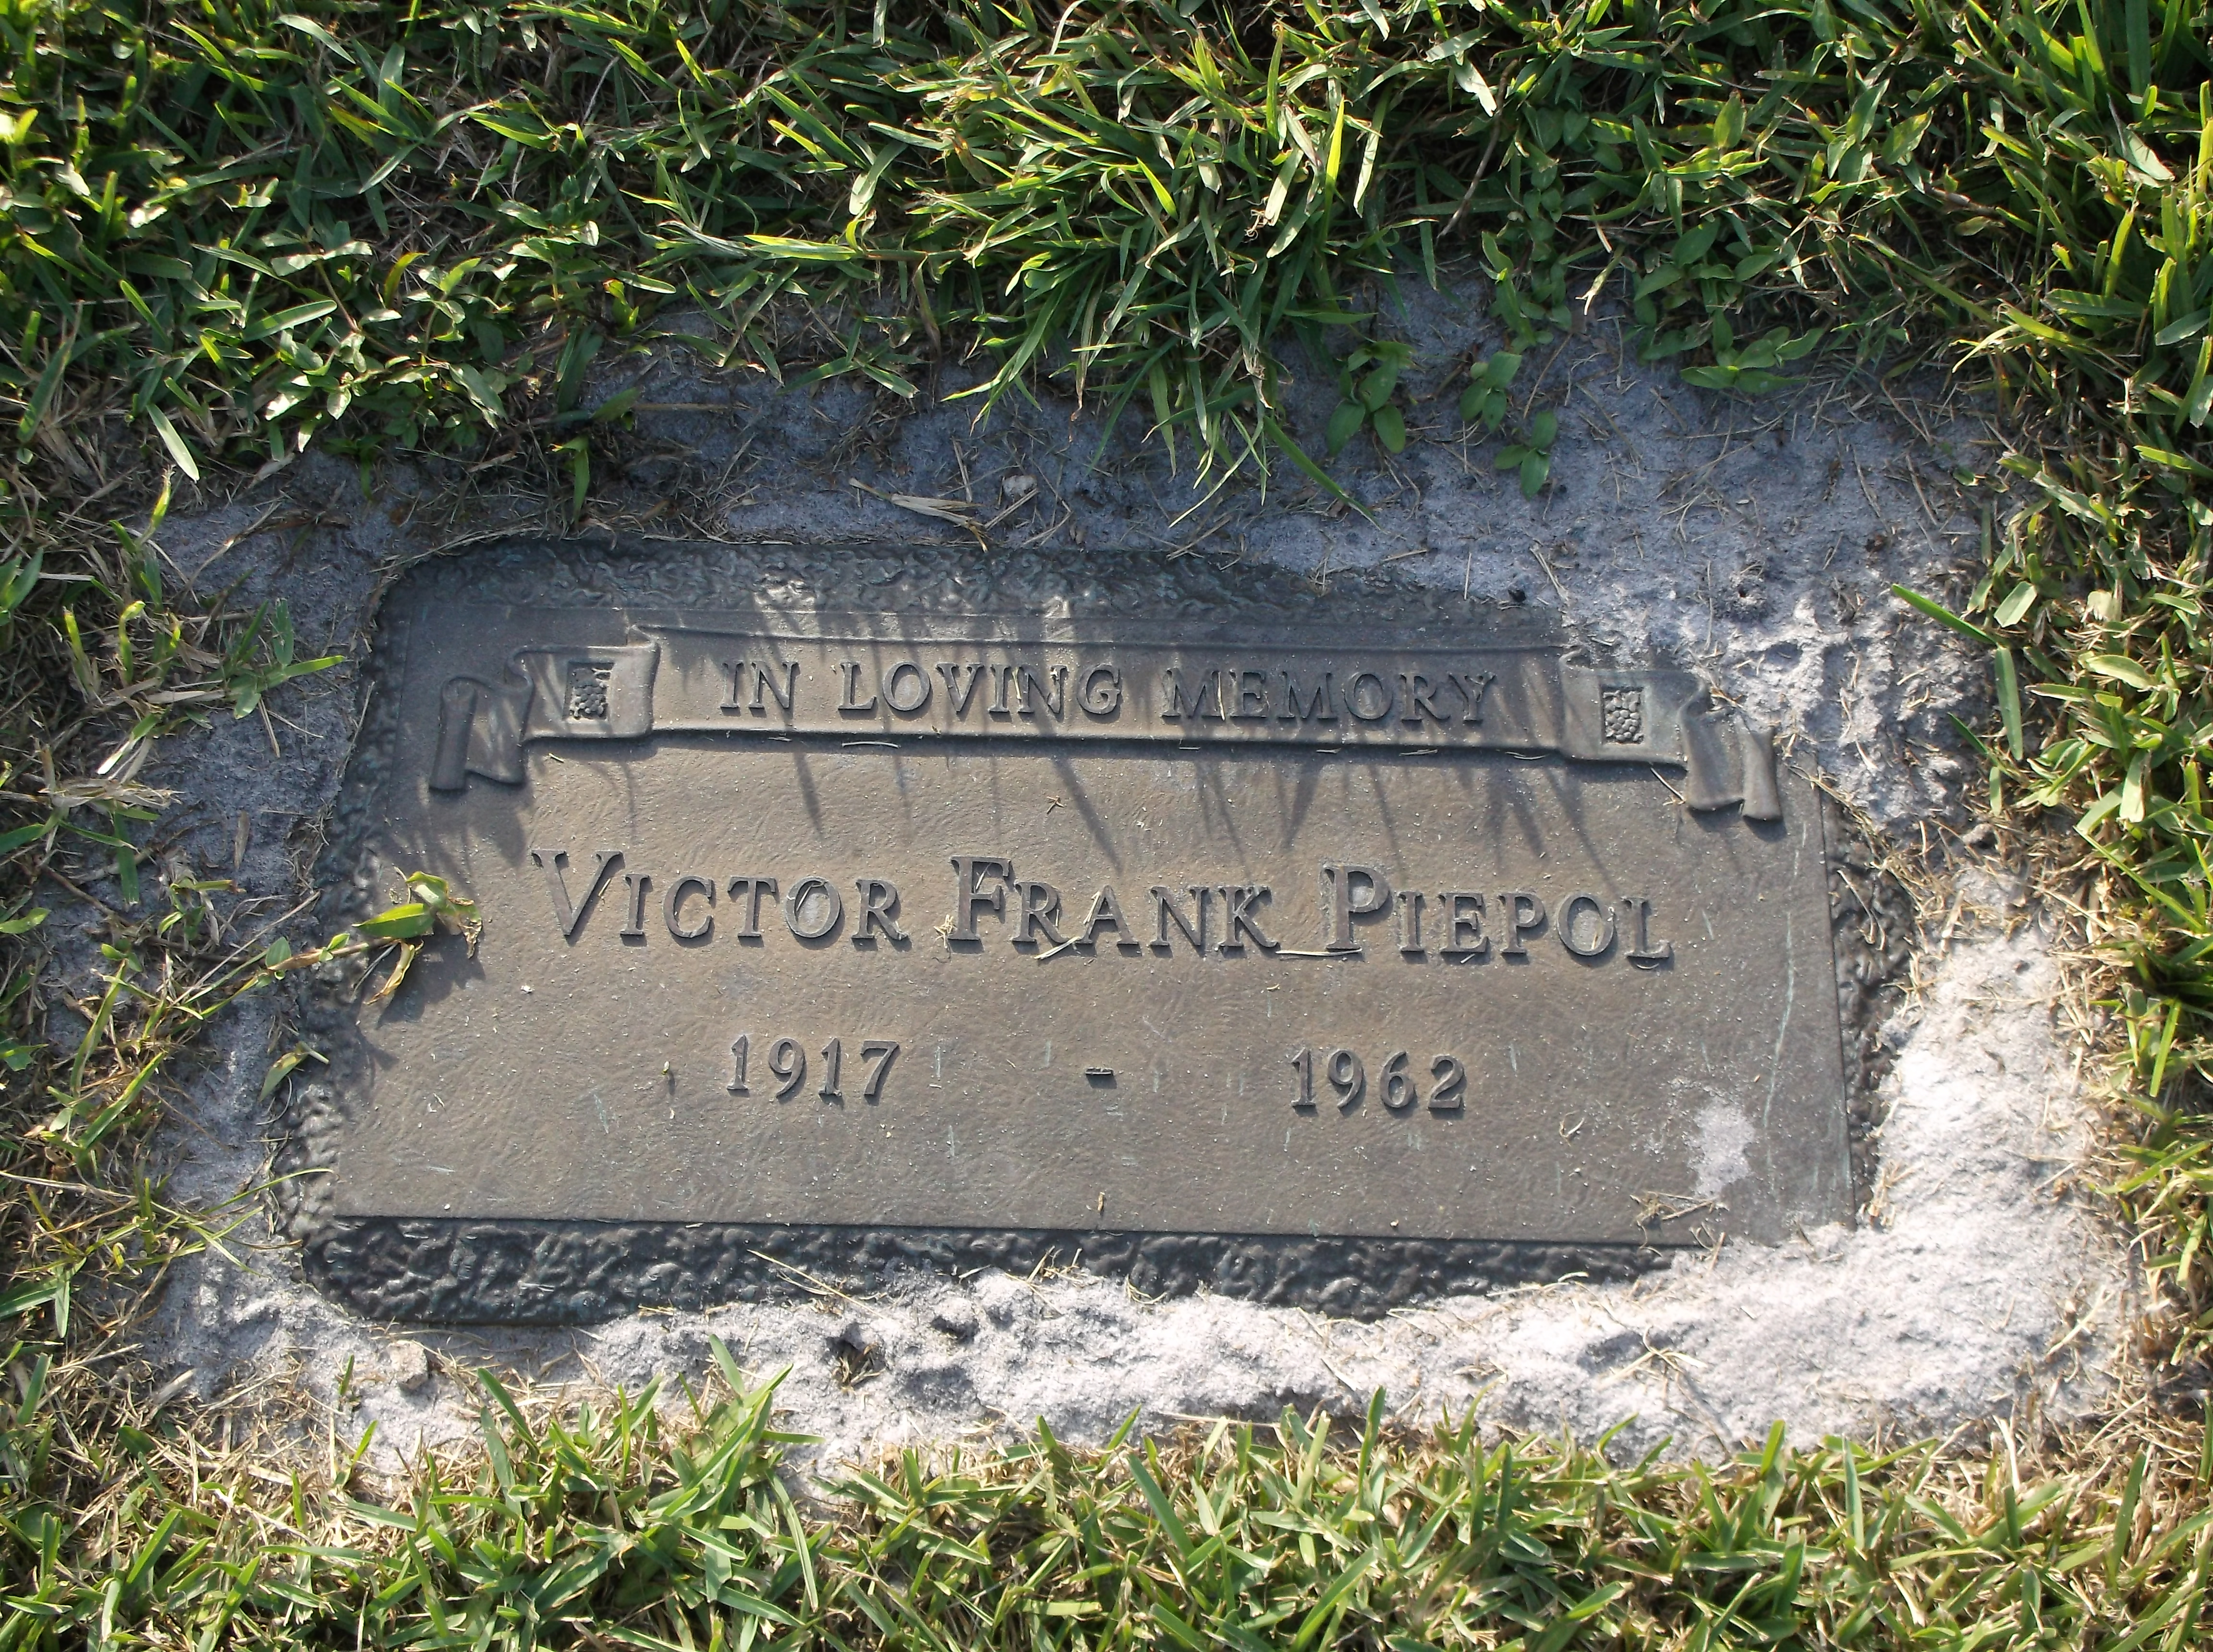 Victor Frank Piepol